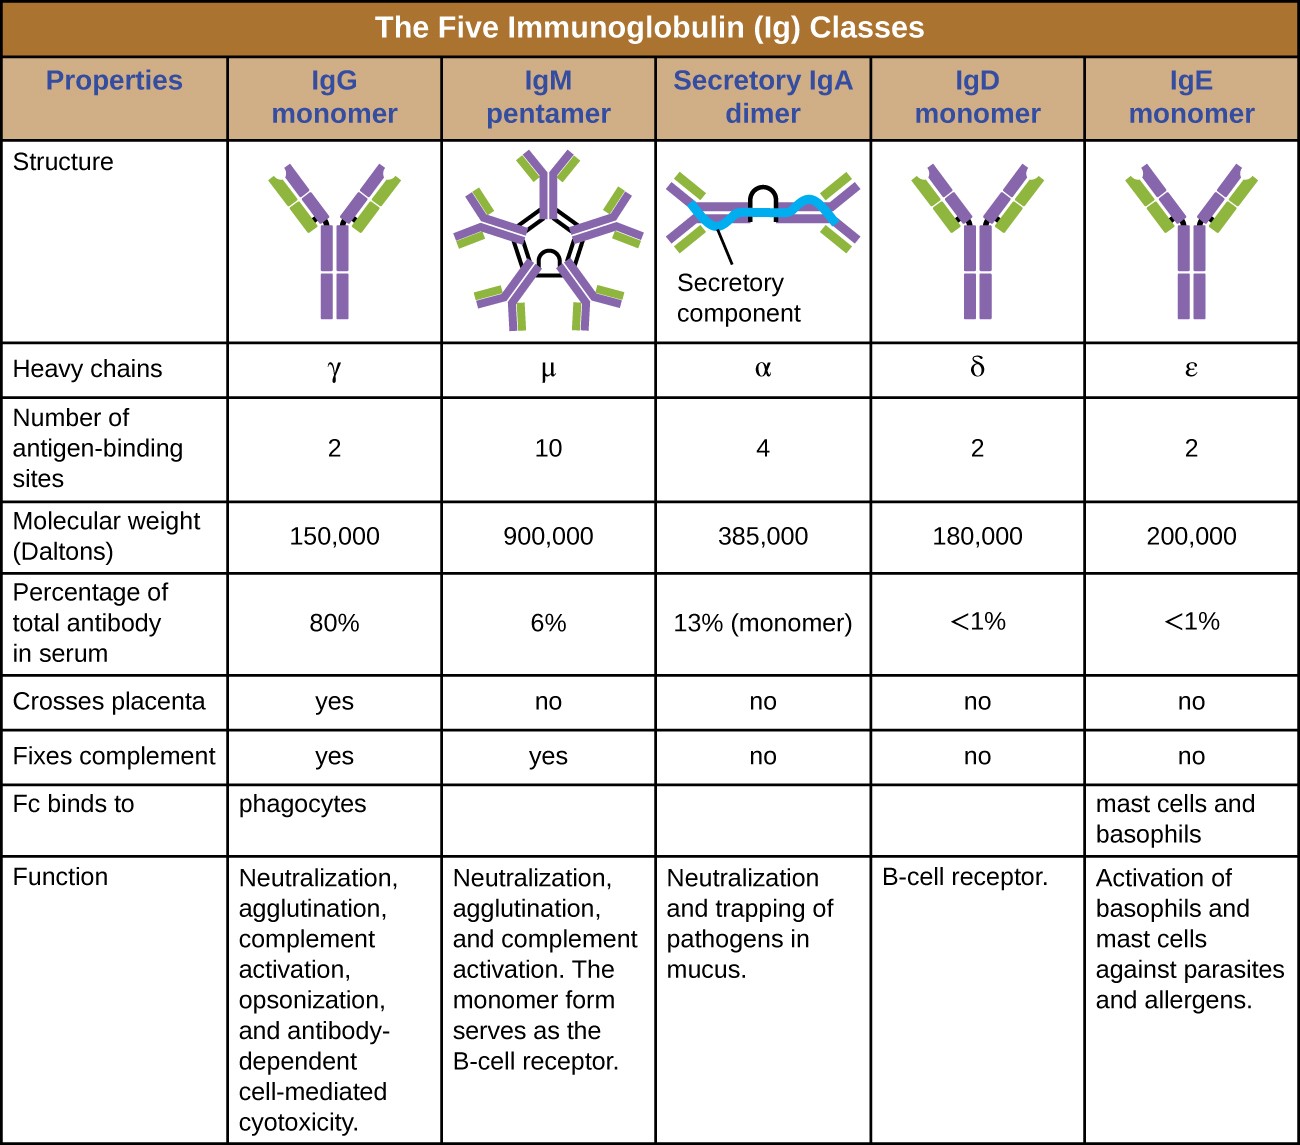 Table titled: The five immunoglobulin (Ig) classes